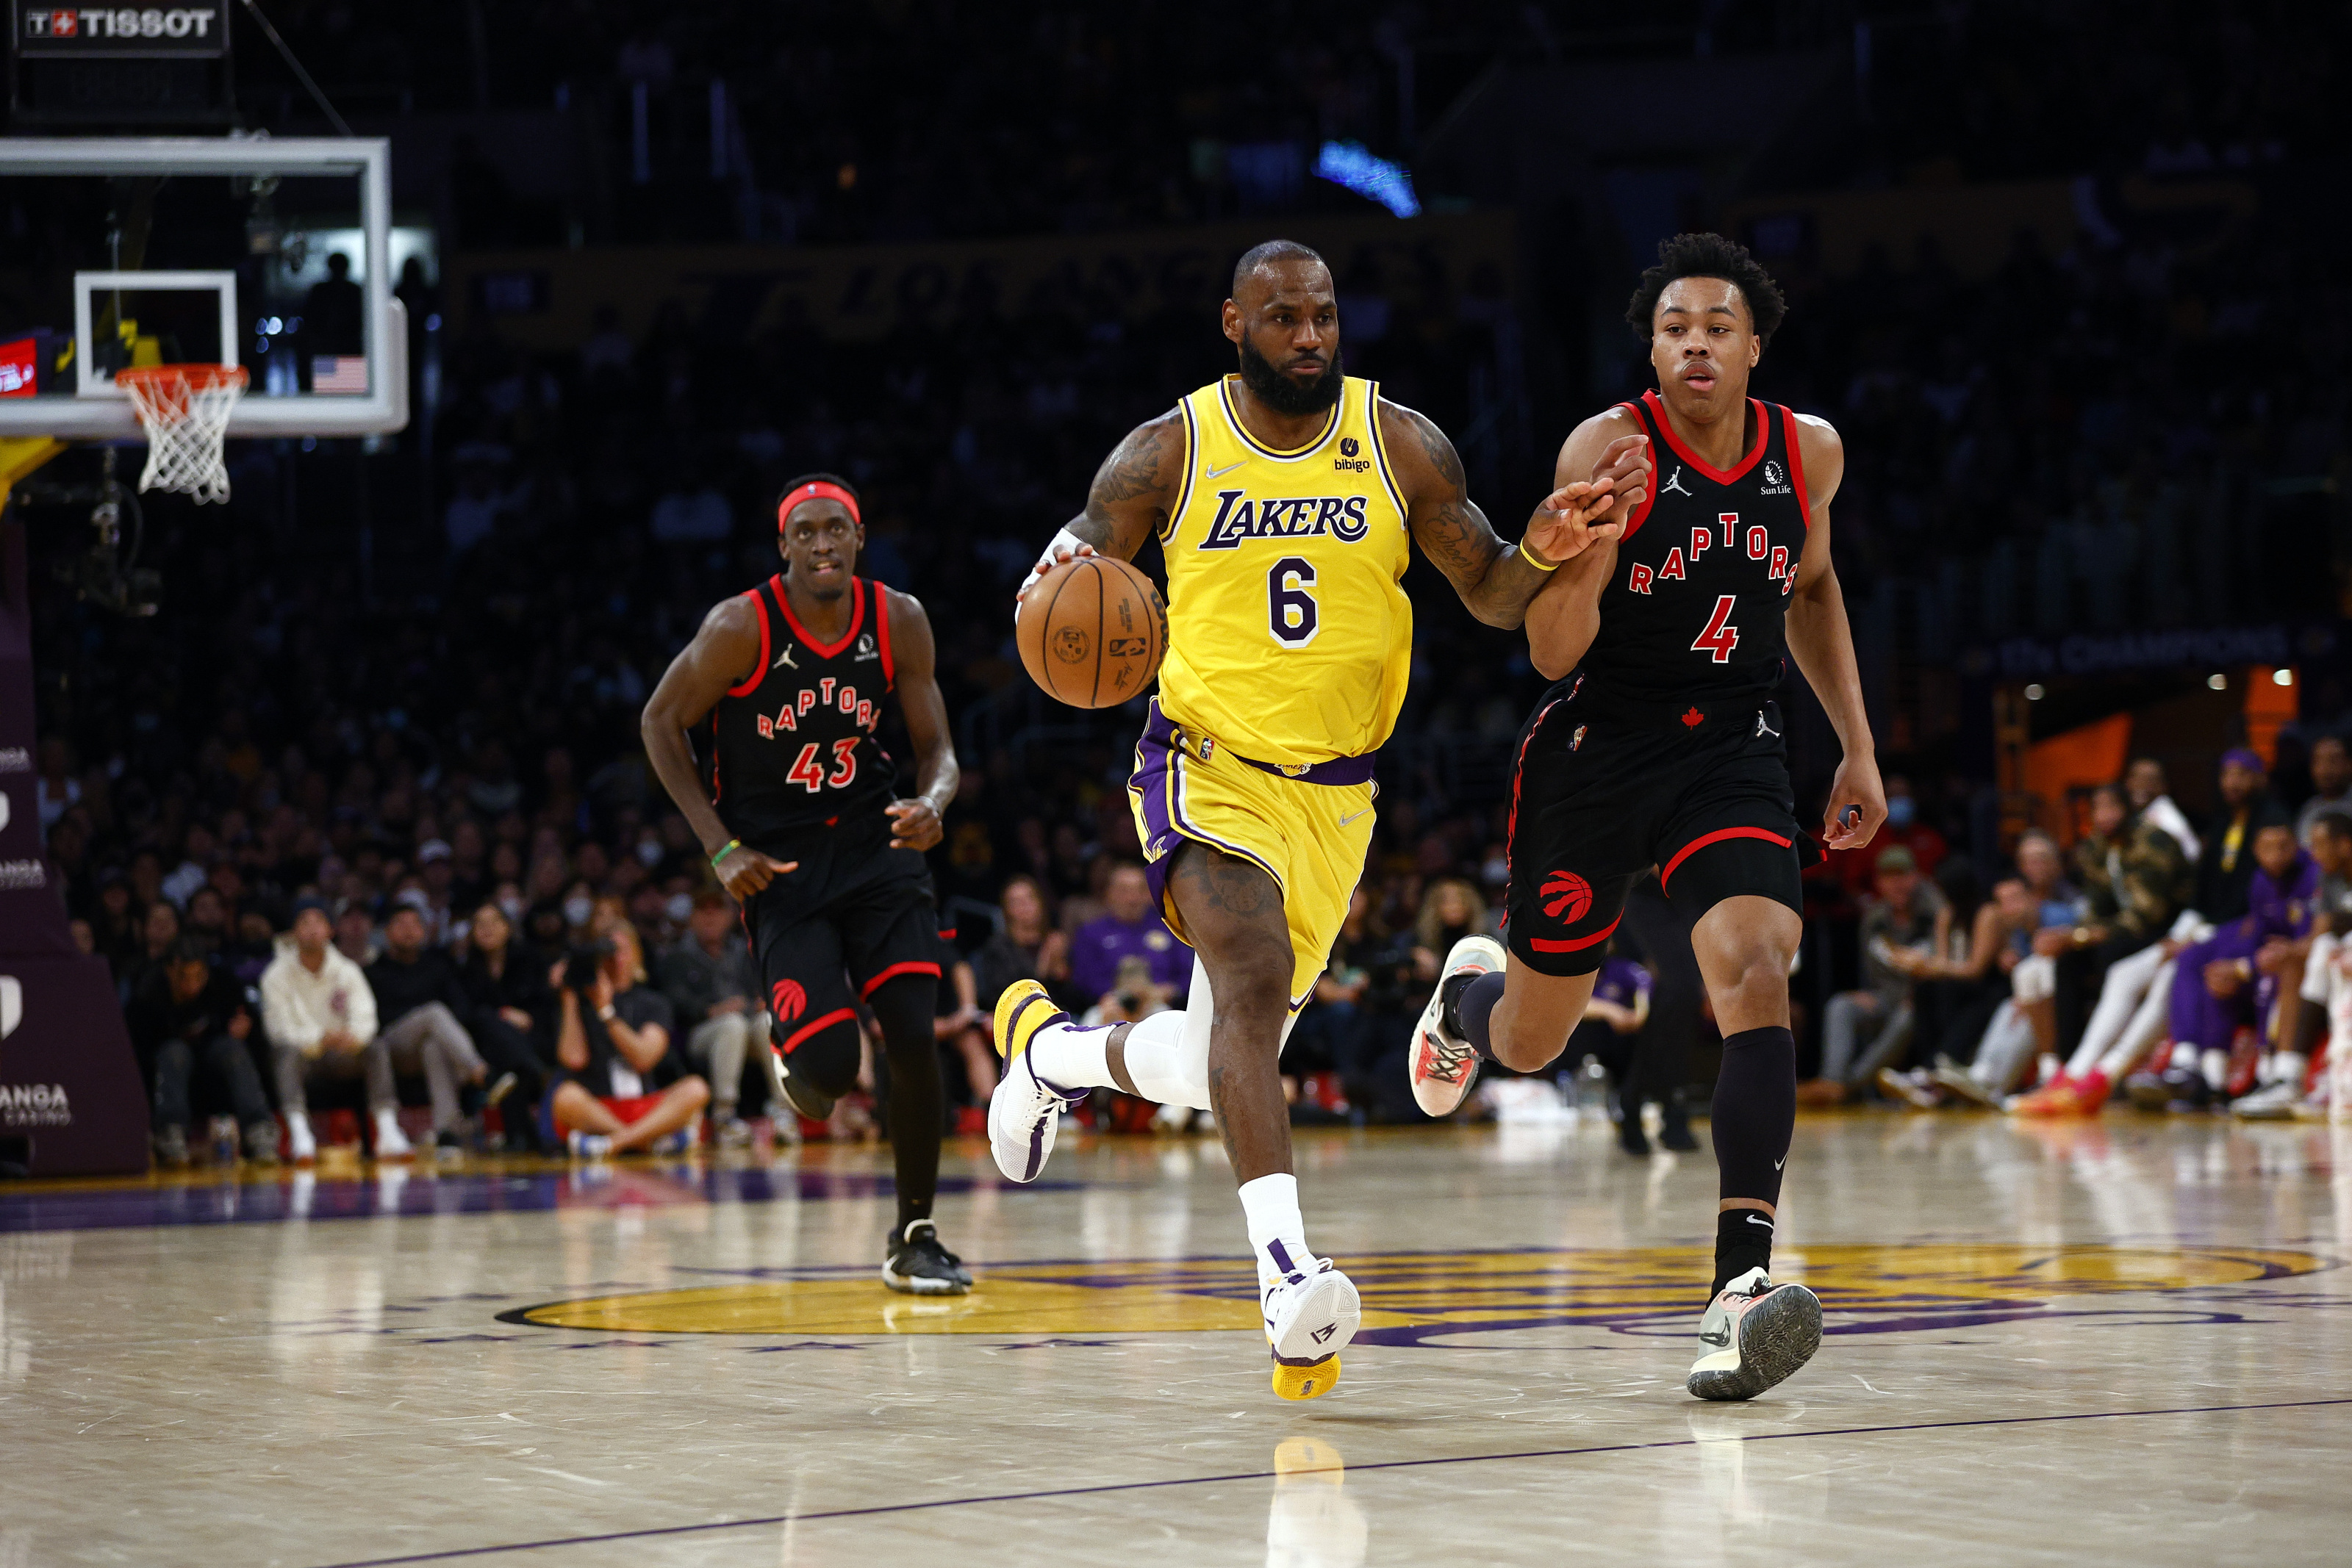 Raptors Game Tonight Raptors vs Lakers Odds, Starting Lineup, Injury Report, Predictions, TV Channel for Mar